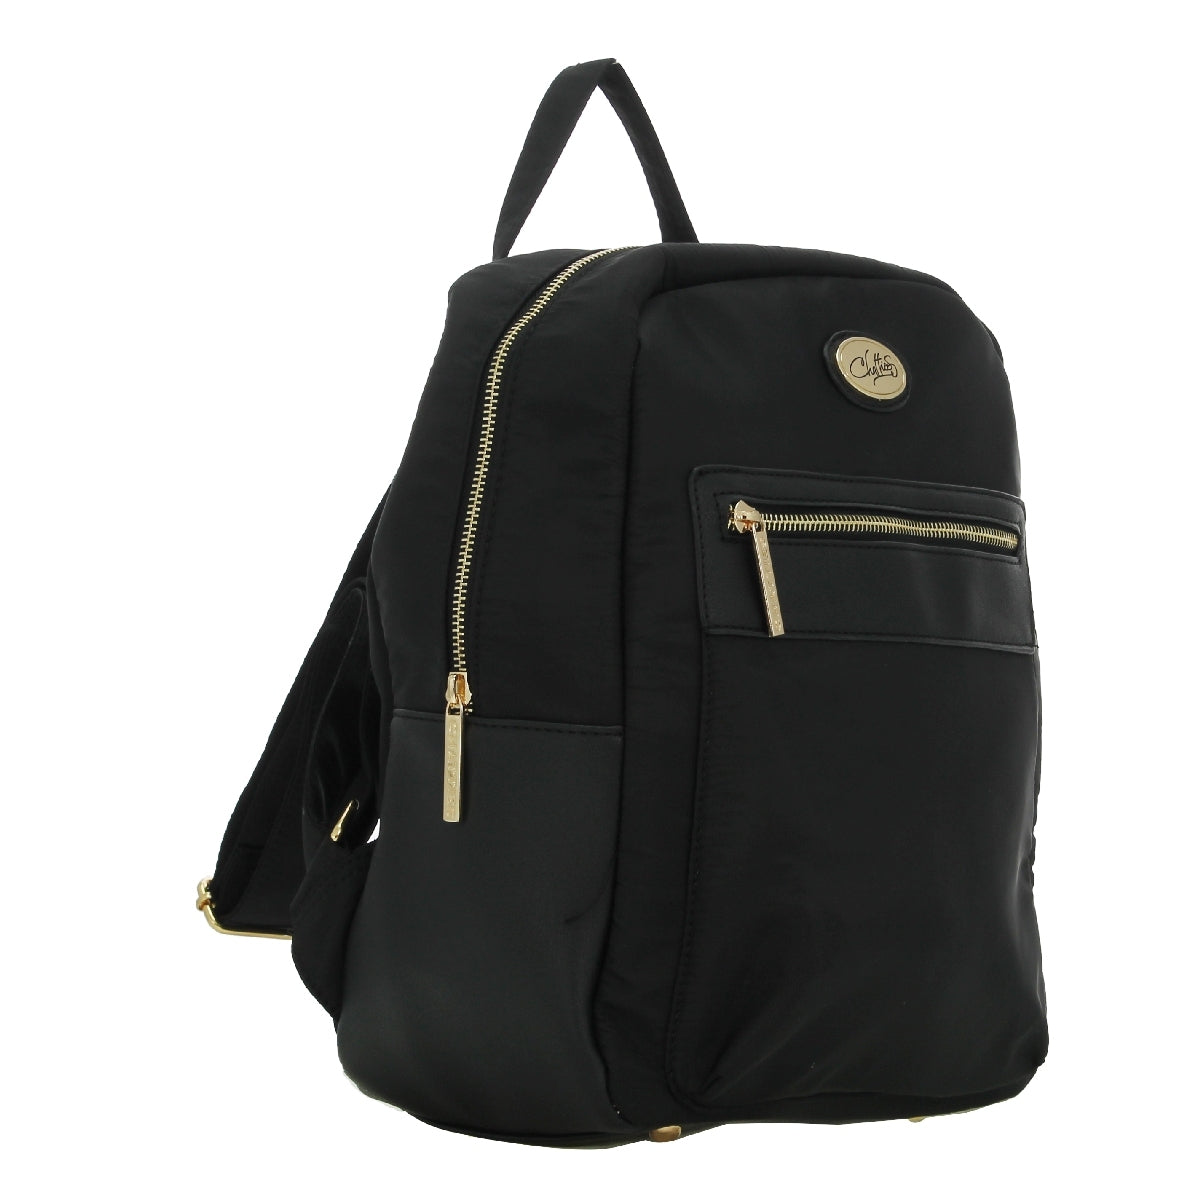 Backpack [Chatties] de nylon con bolsa frontal color negro